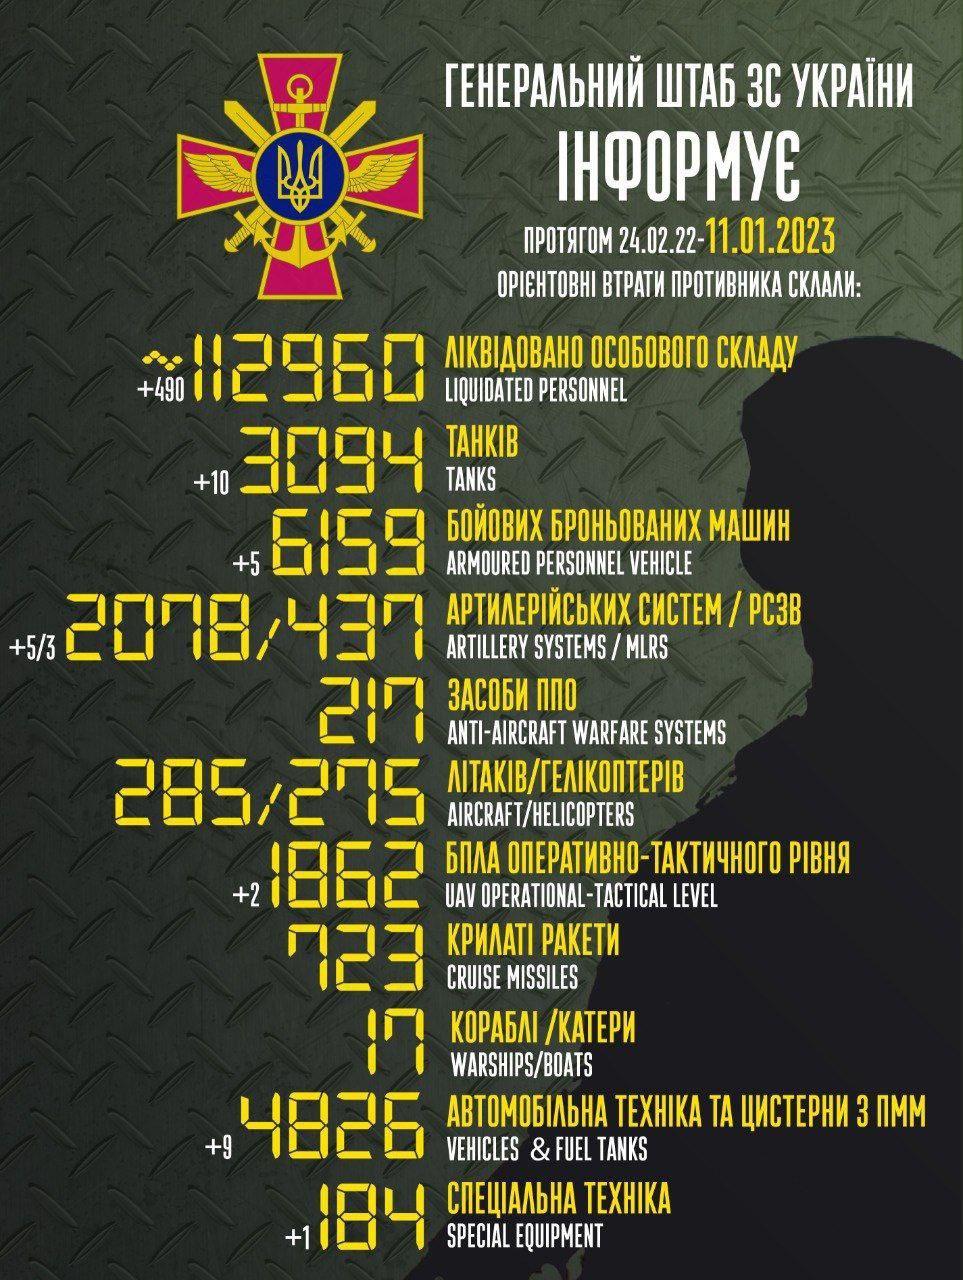 Russia’s losses in Ukraine as of 11/01/2023